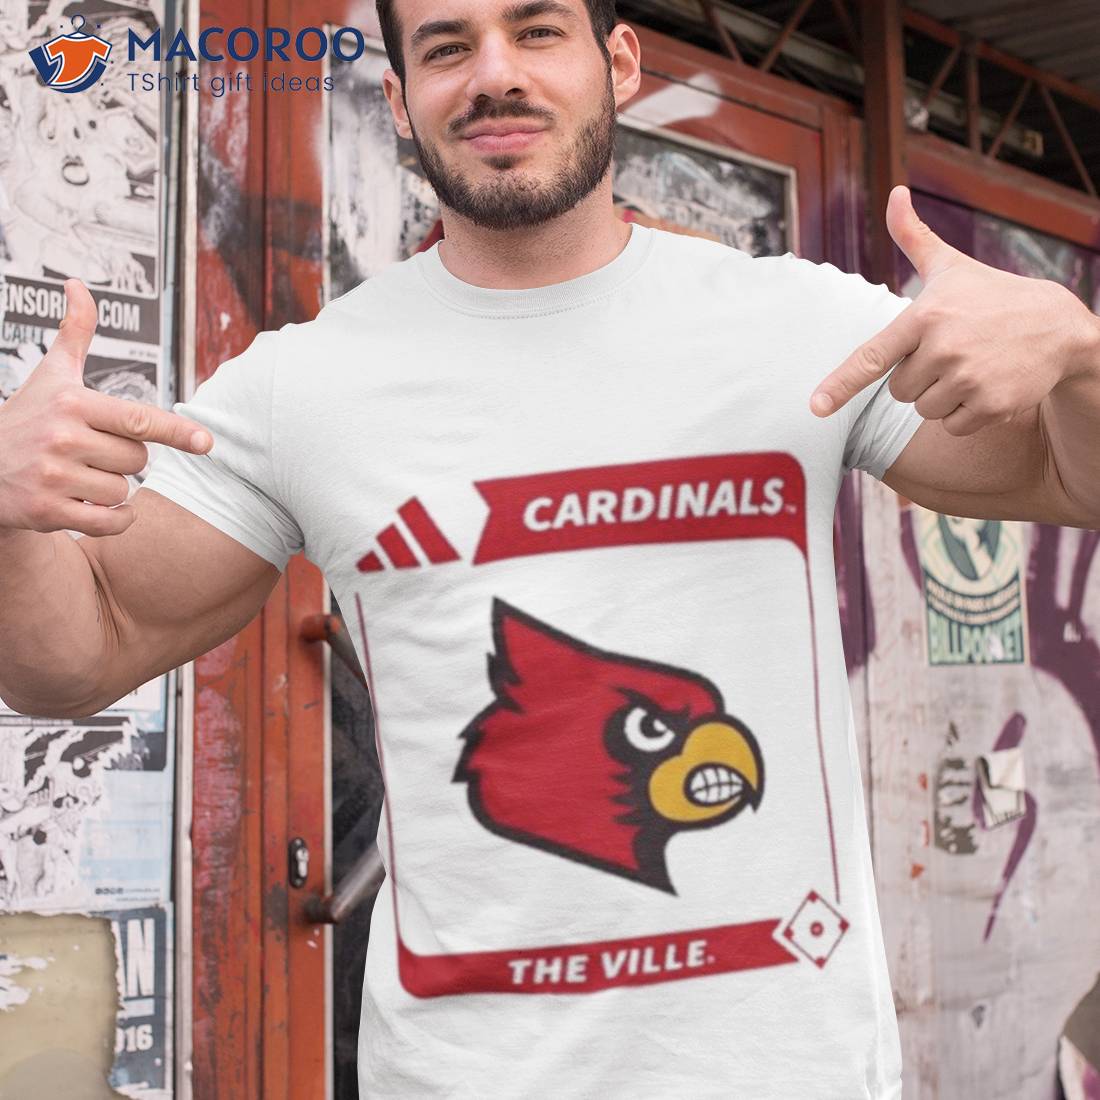 University of Louisville Cardinals Logo Sweatshirt